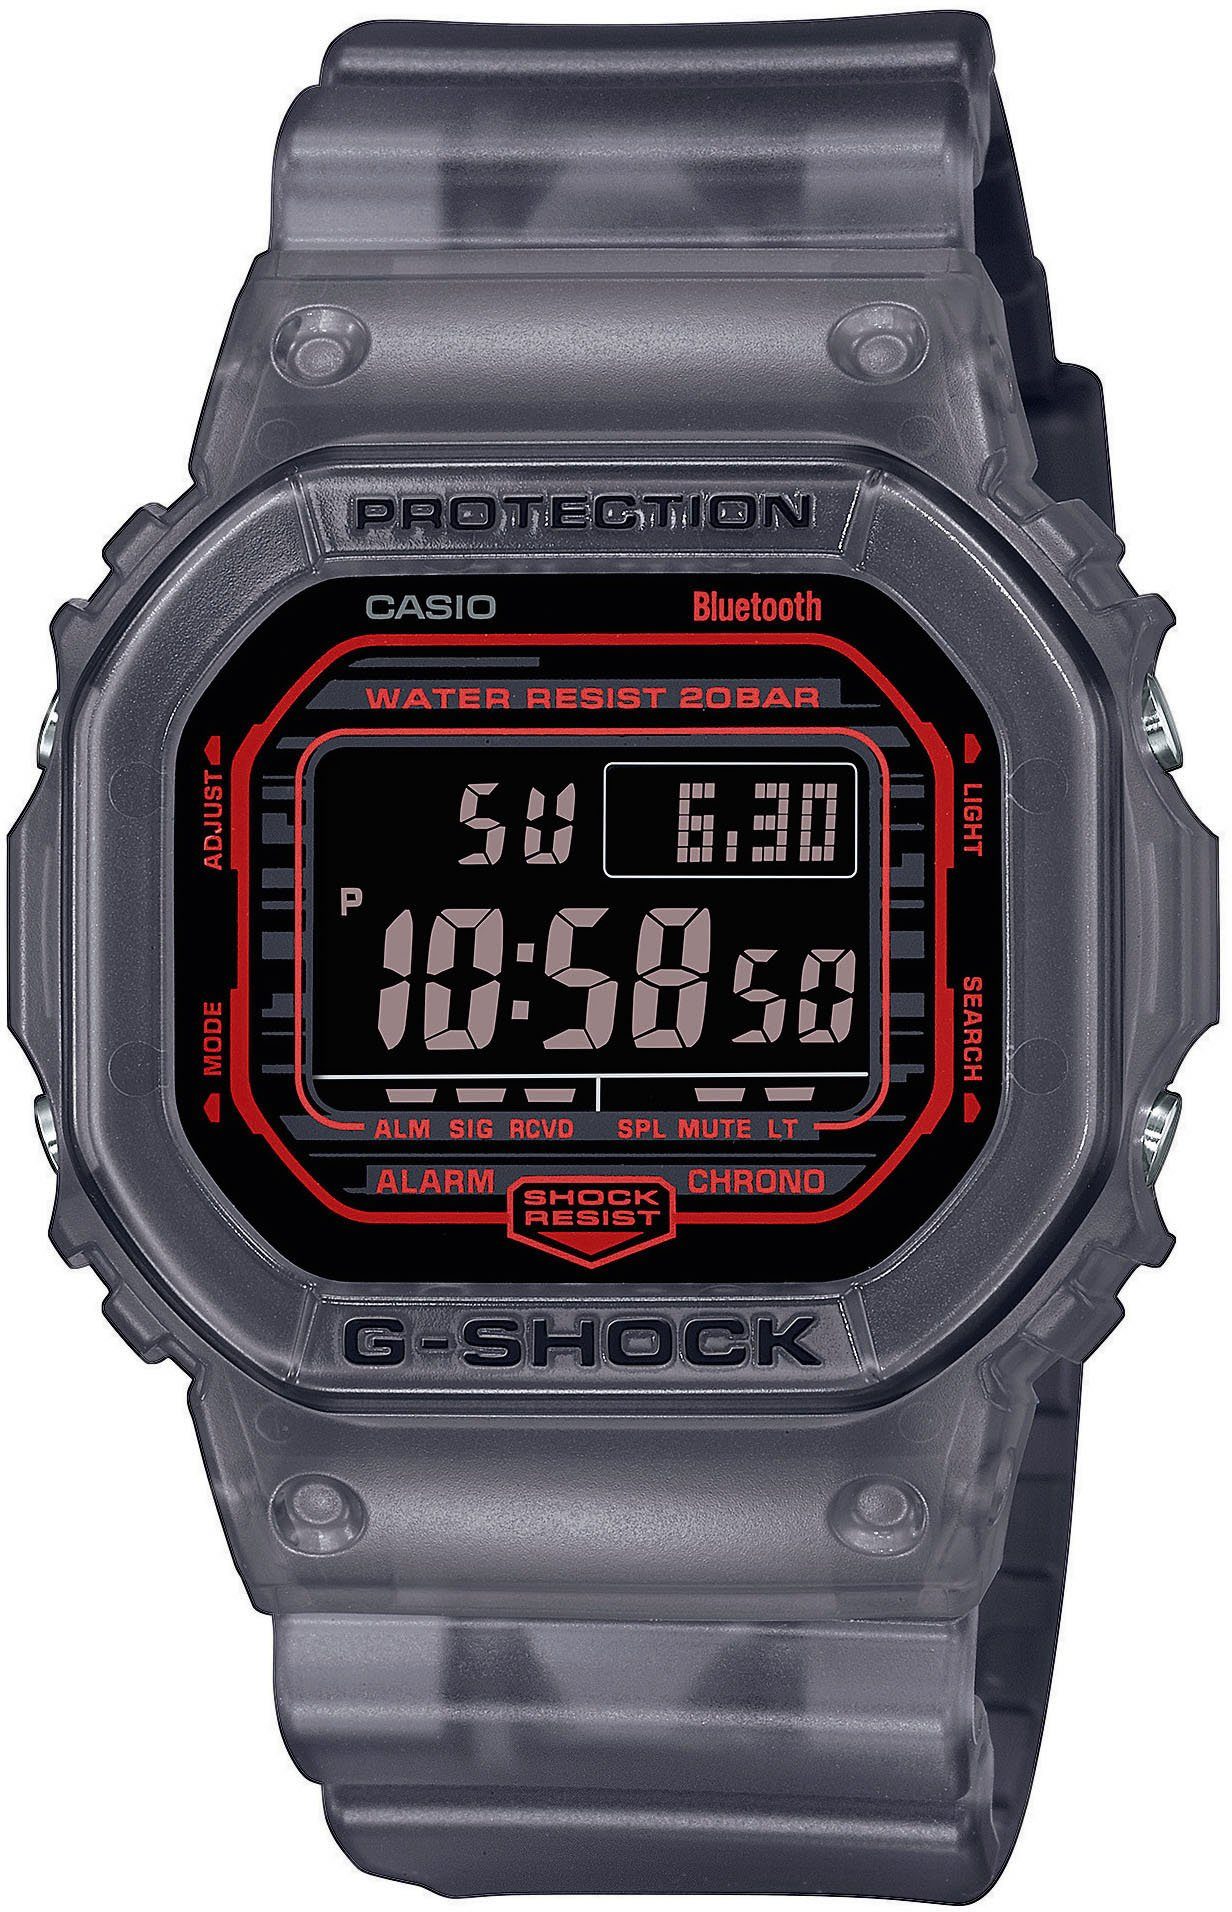 DW-B5600G-1ER Smartwatch G-SHOCK CASIO